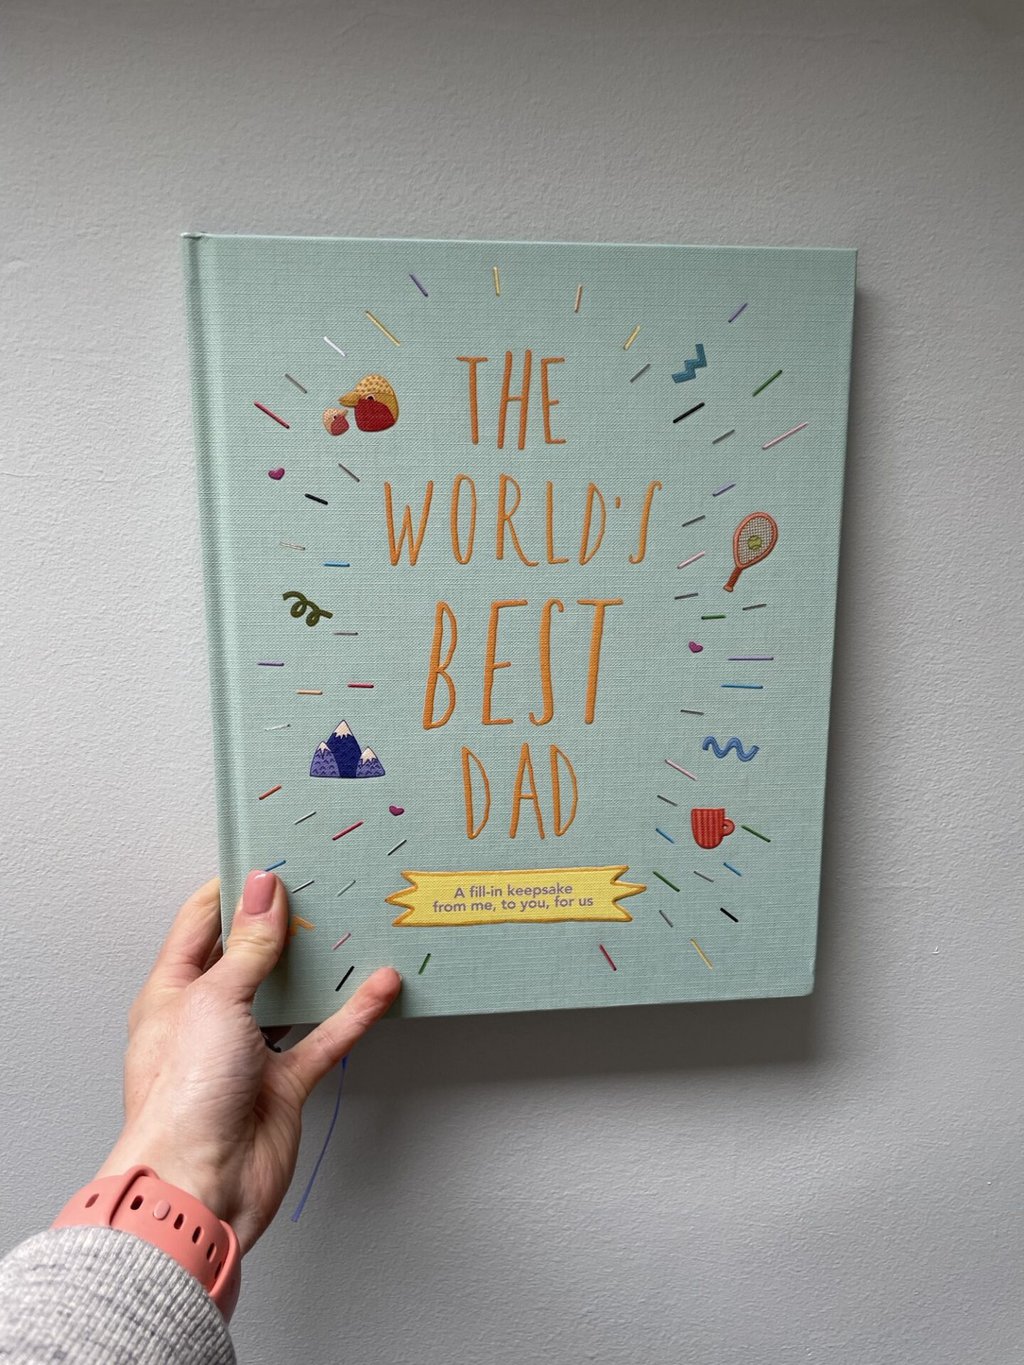 The World’s Best Dad